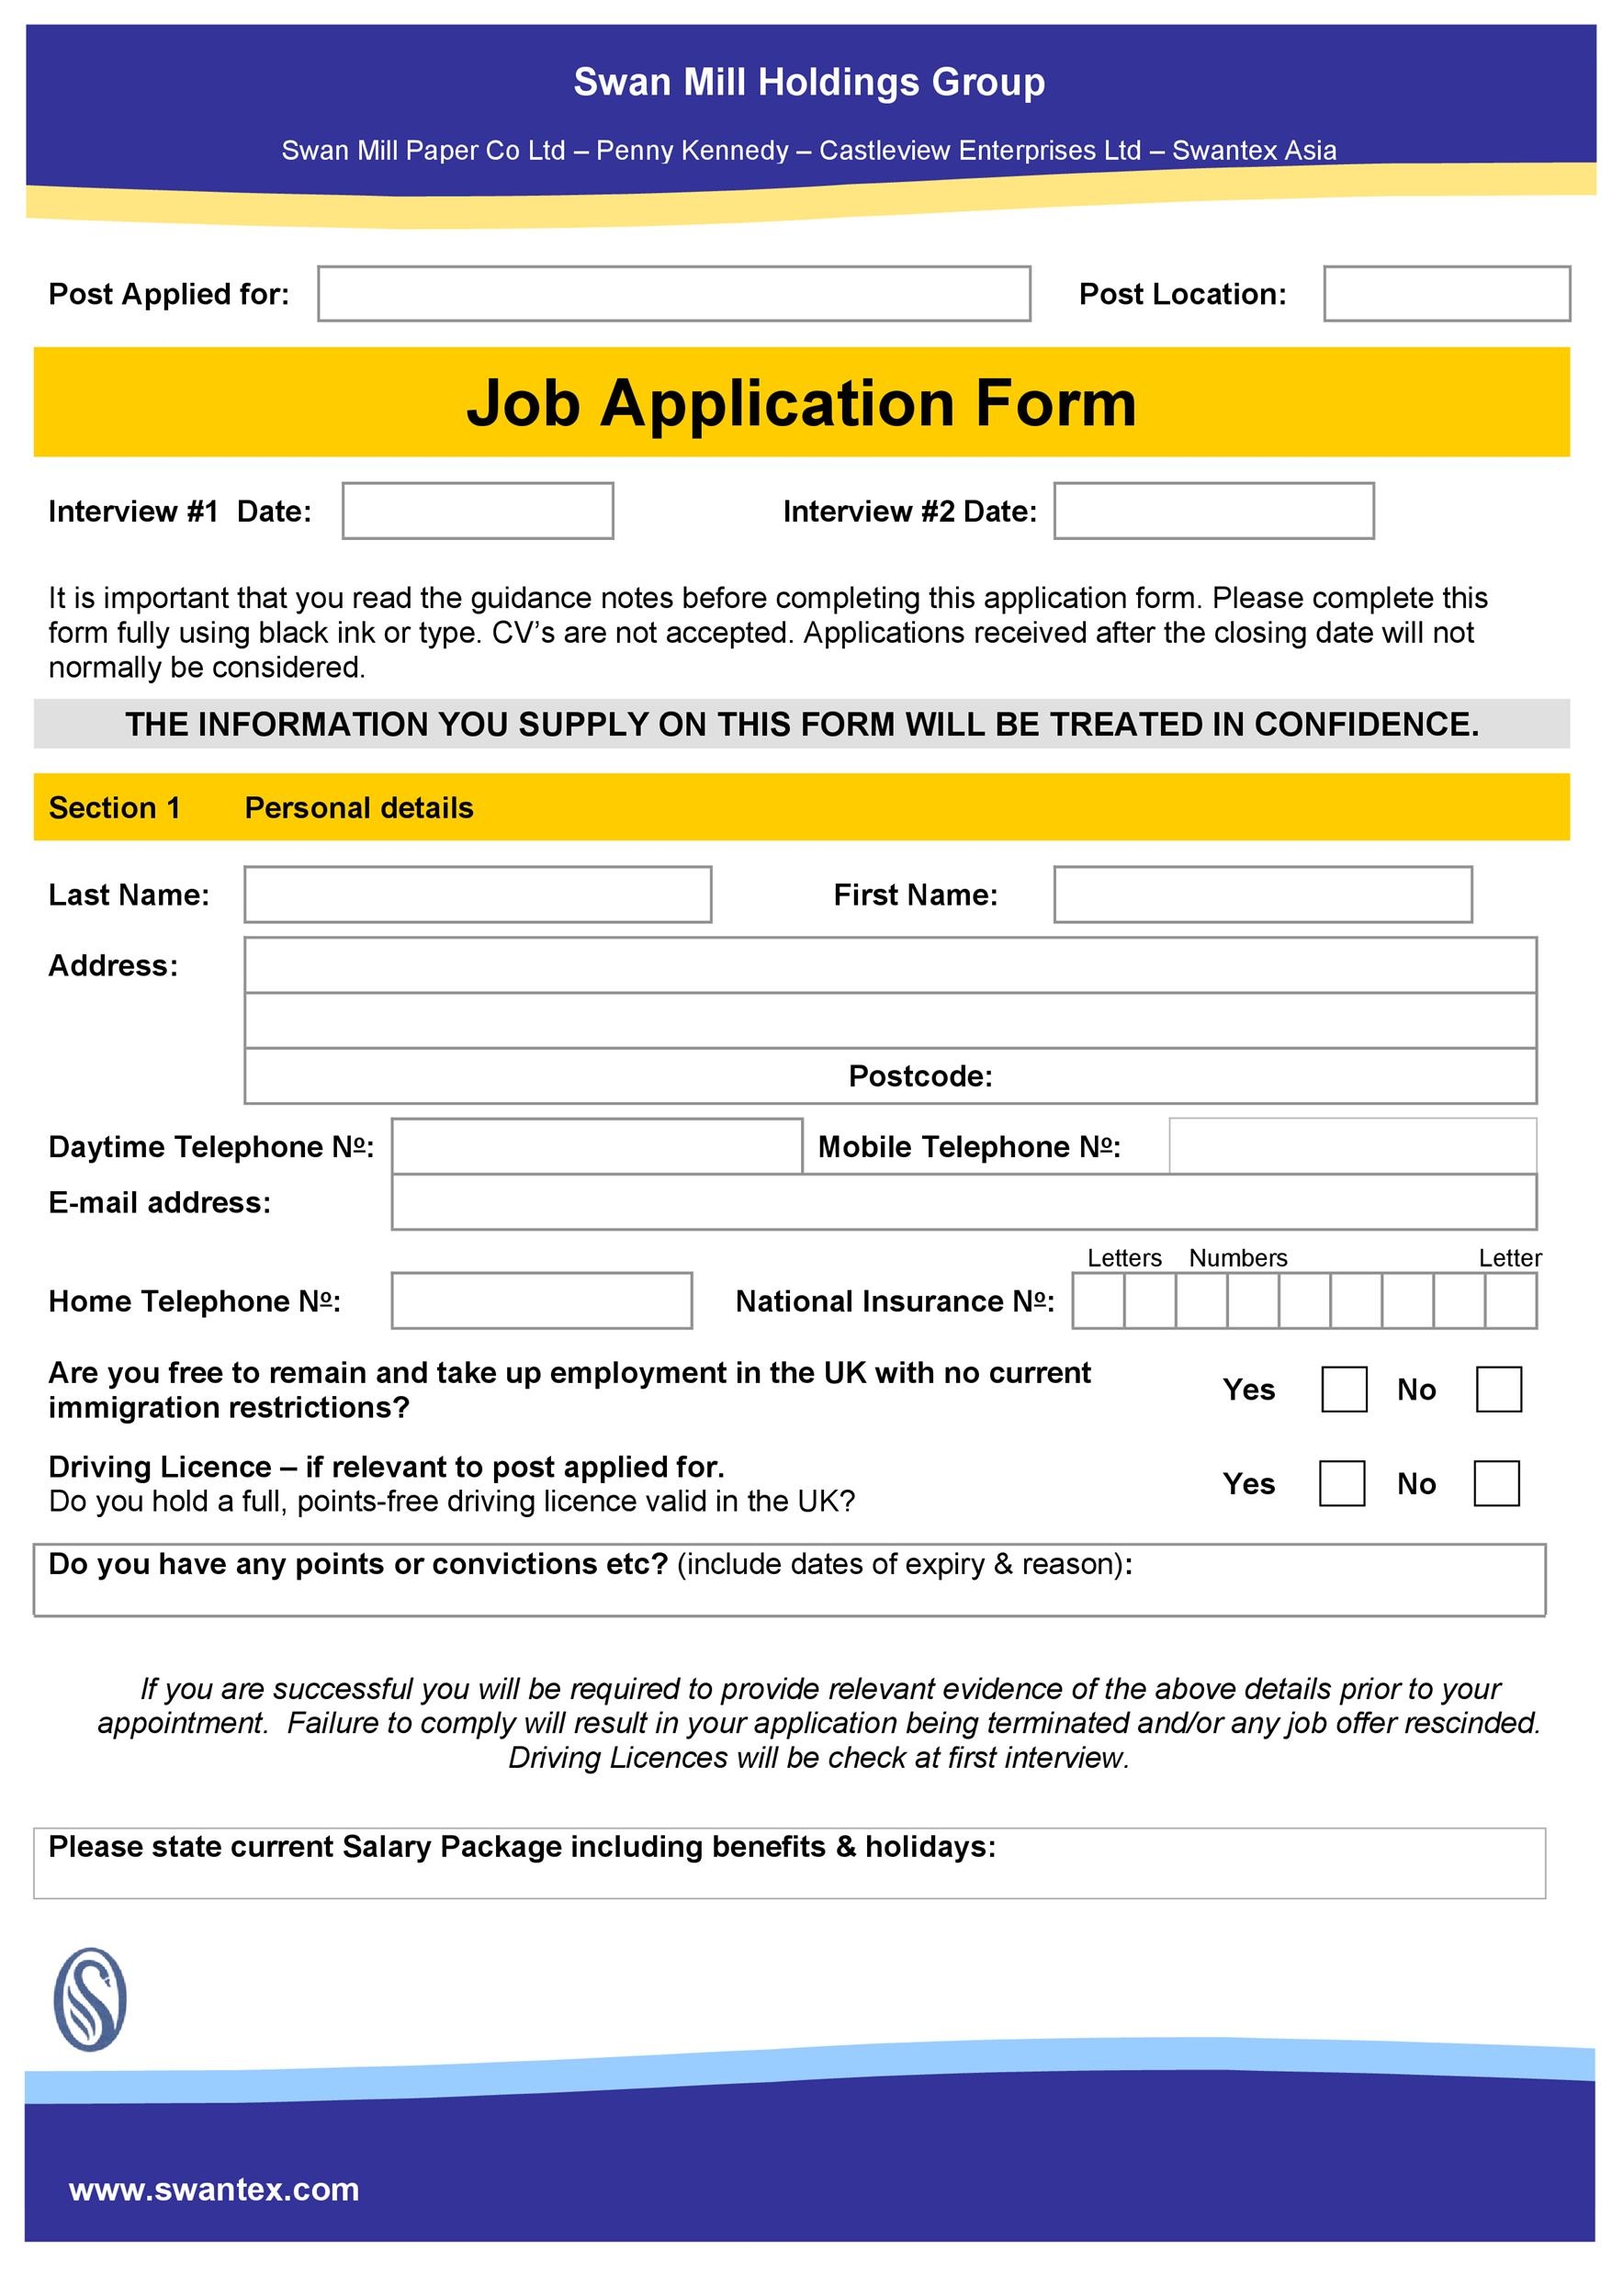 50 Free Employment Job Application Form Templates Printable TemplateLab - Find Free Printable Forms Online